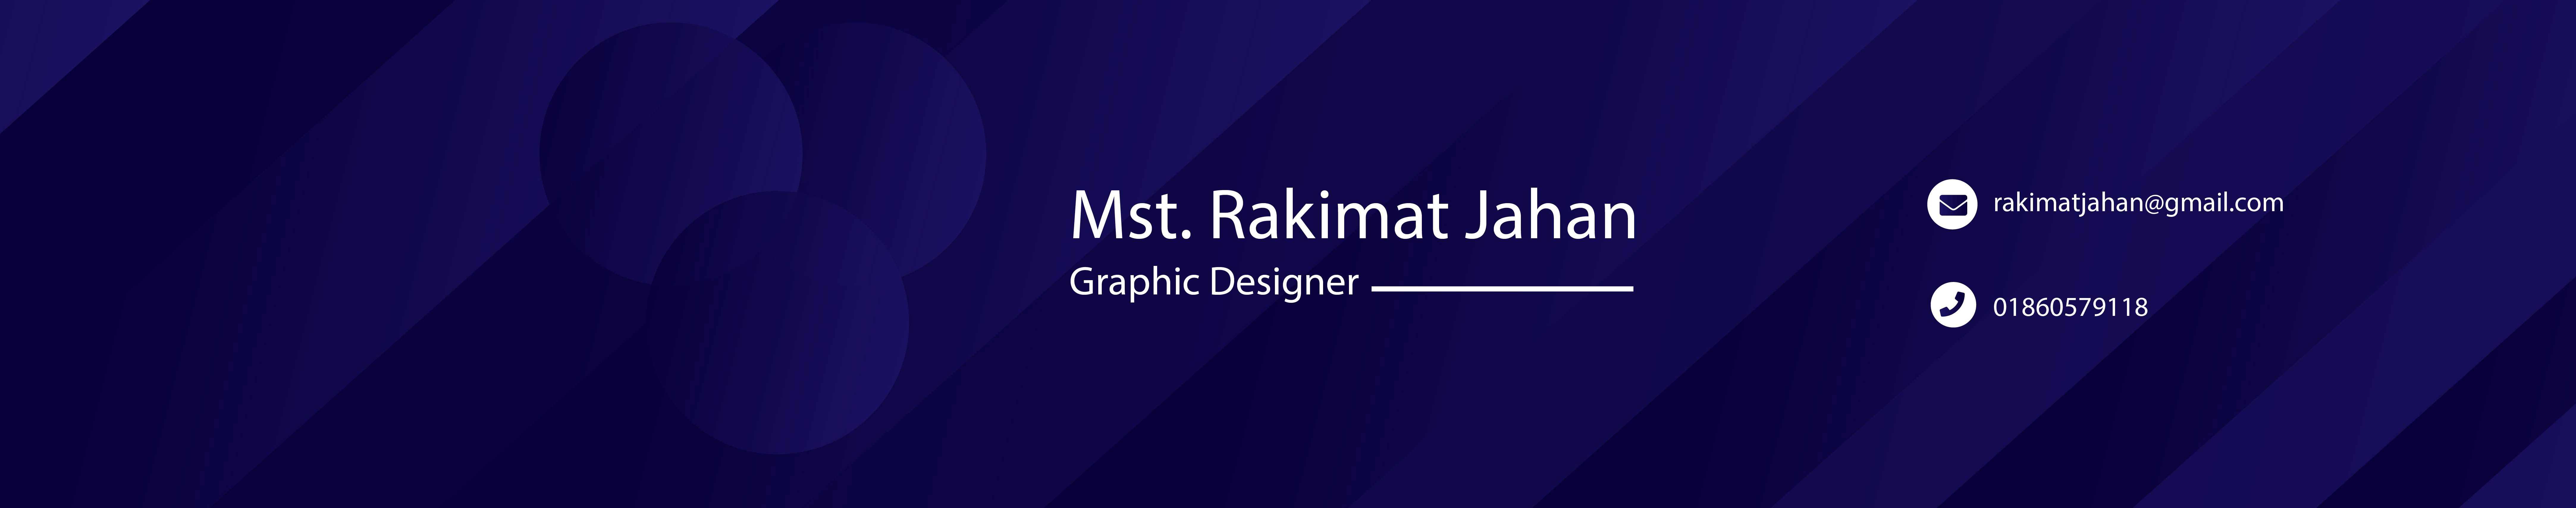 Mst. Rakimat Jahan 的个人资料横幅